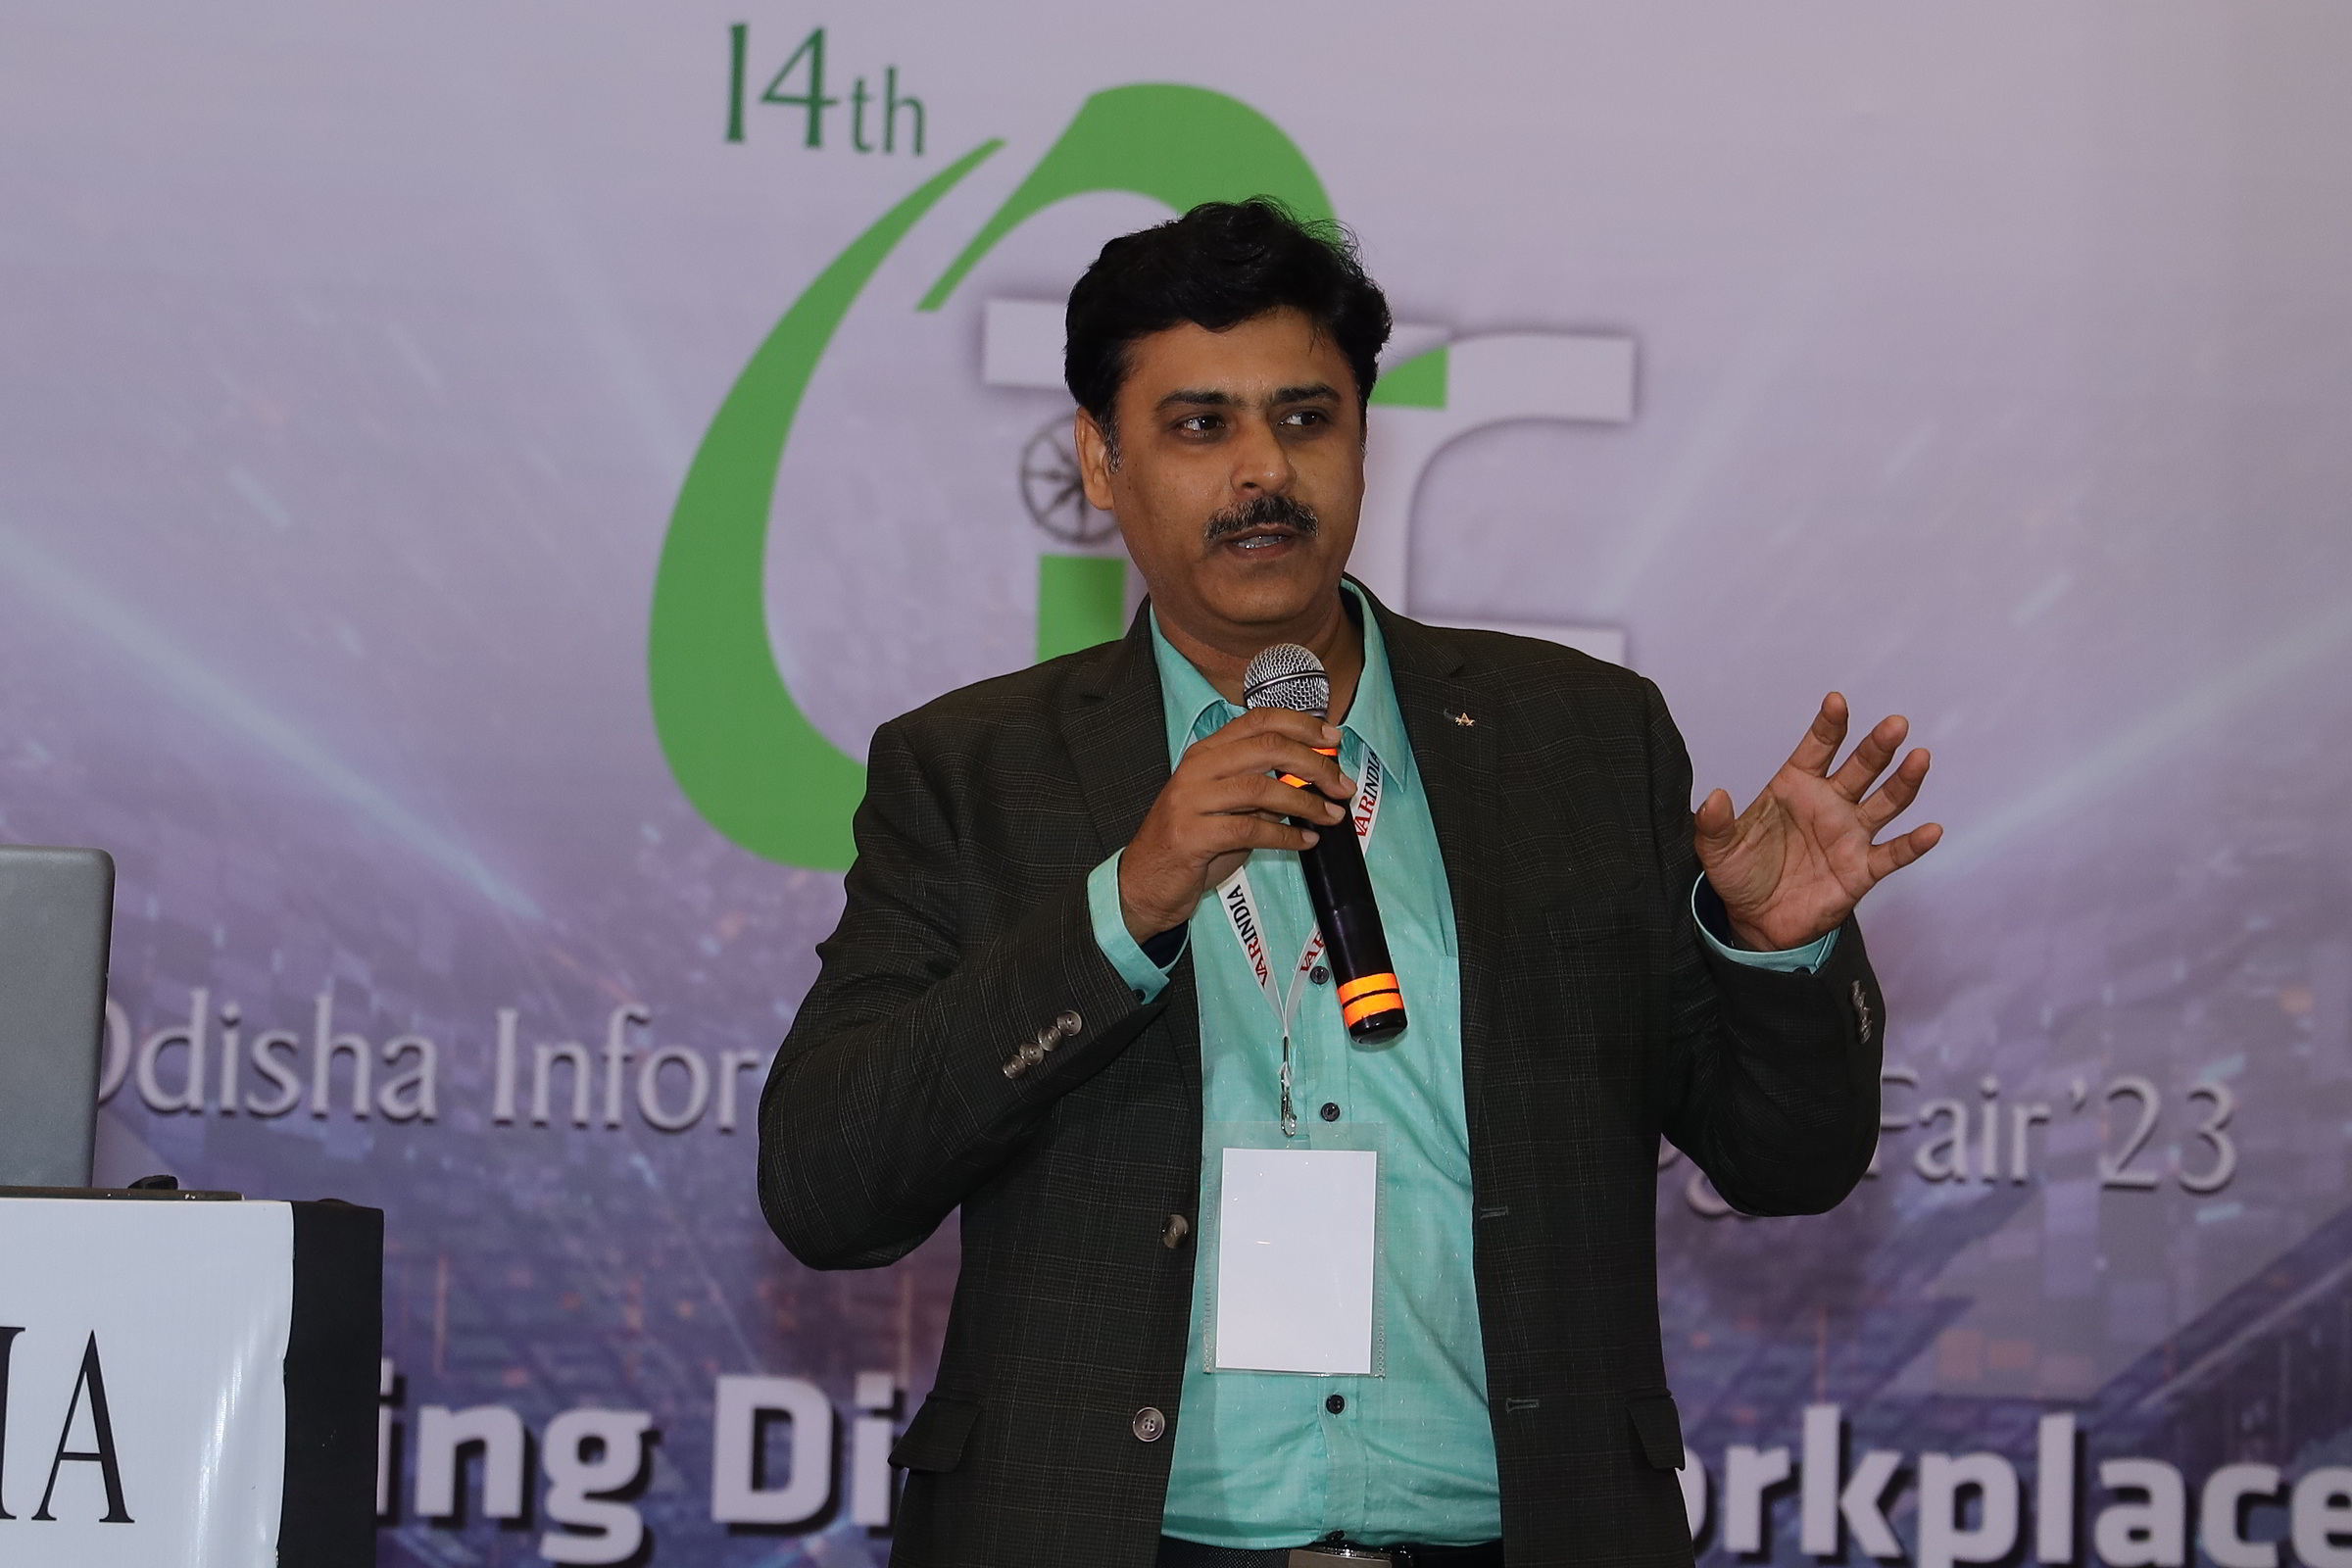 Presentation by Mr. Pranav Bhayani, Head of Presales, iValue InfoSolutions